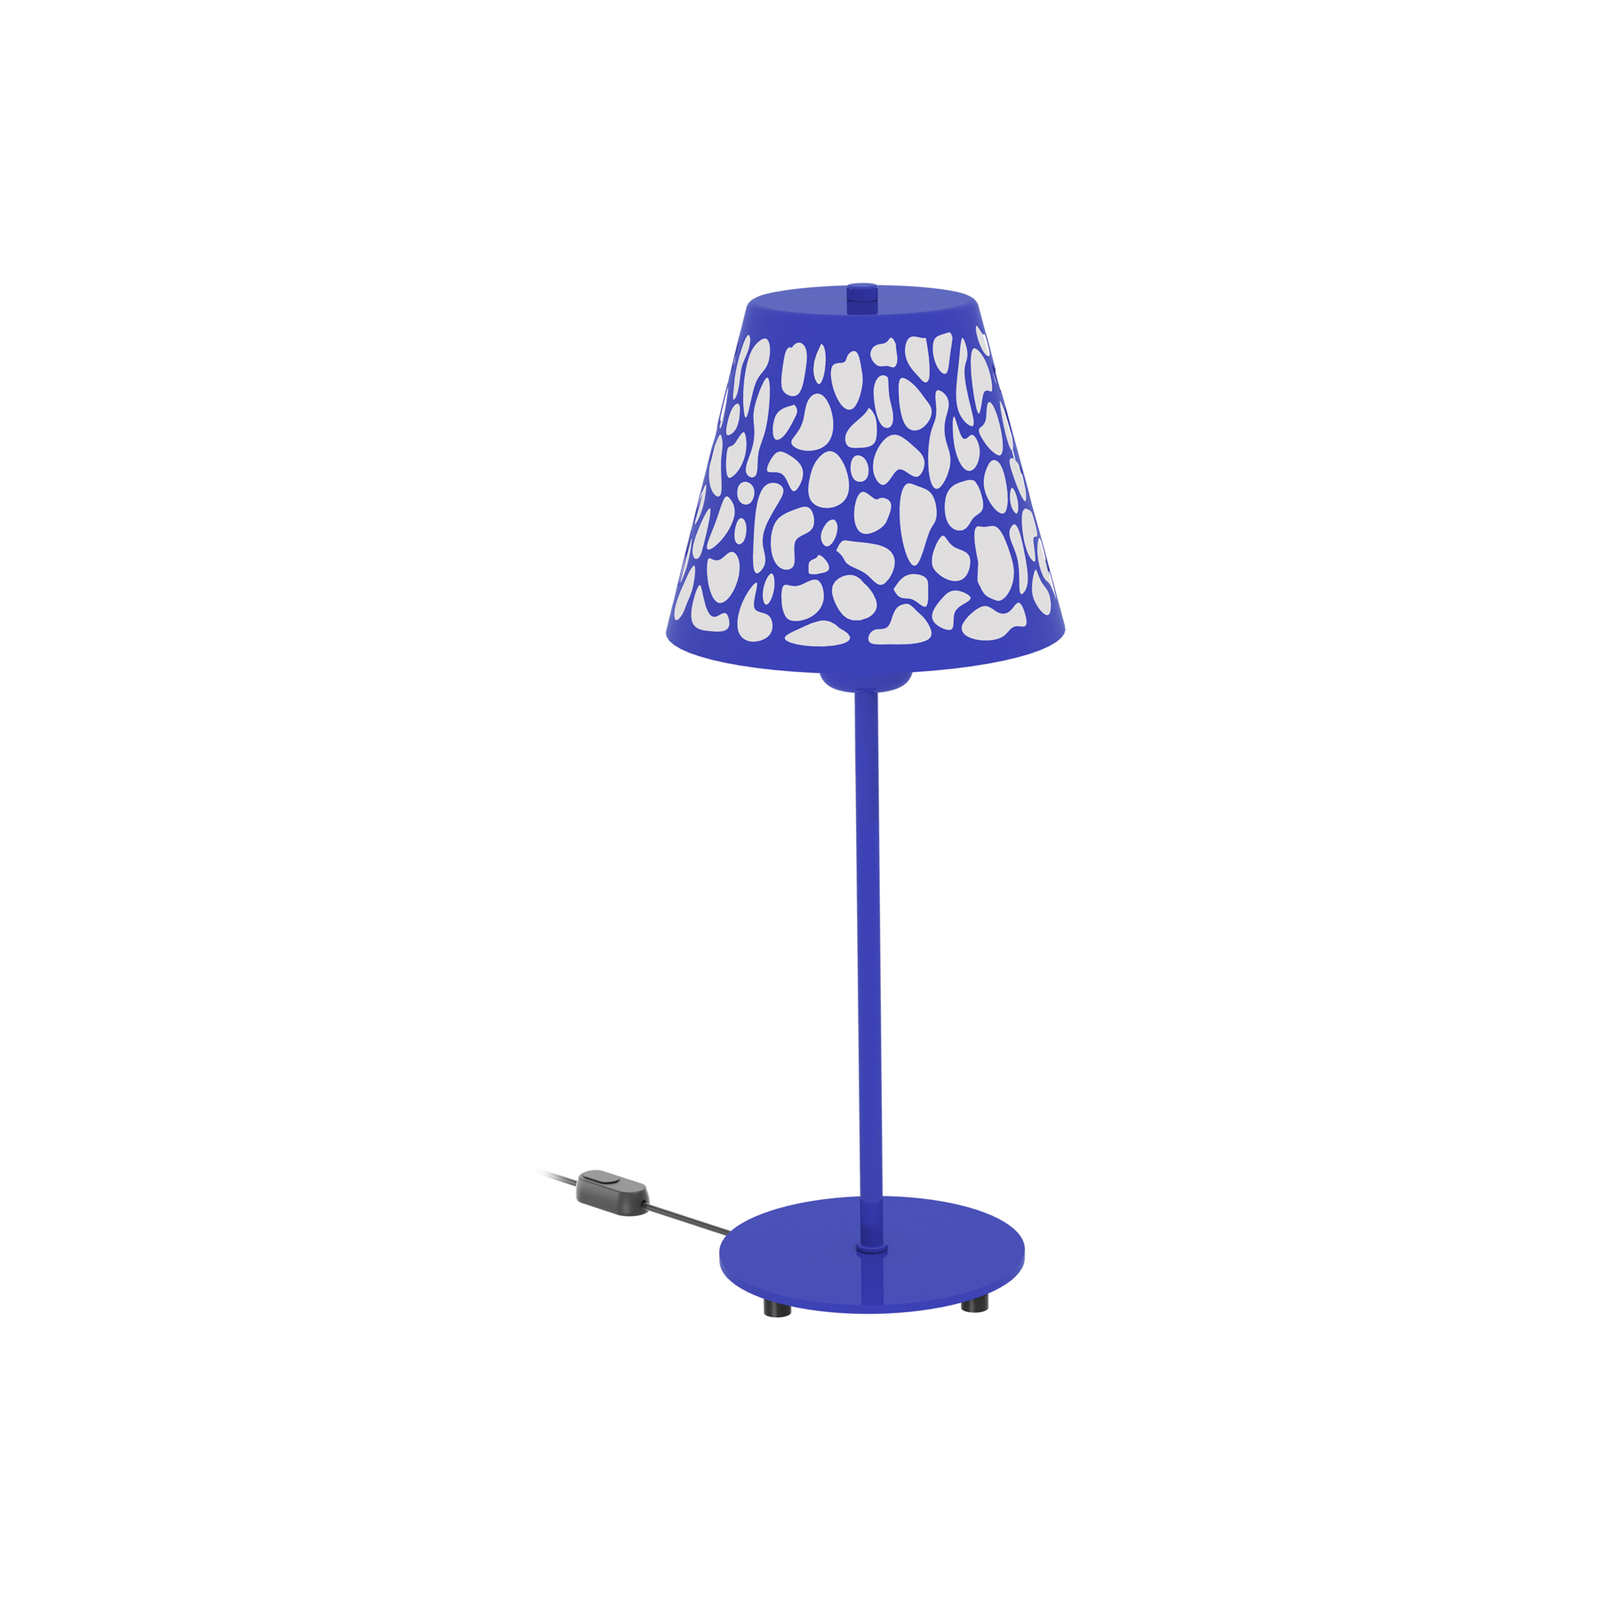 Aluminor Nihoa floor lamp, perforated, blue/white